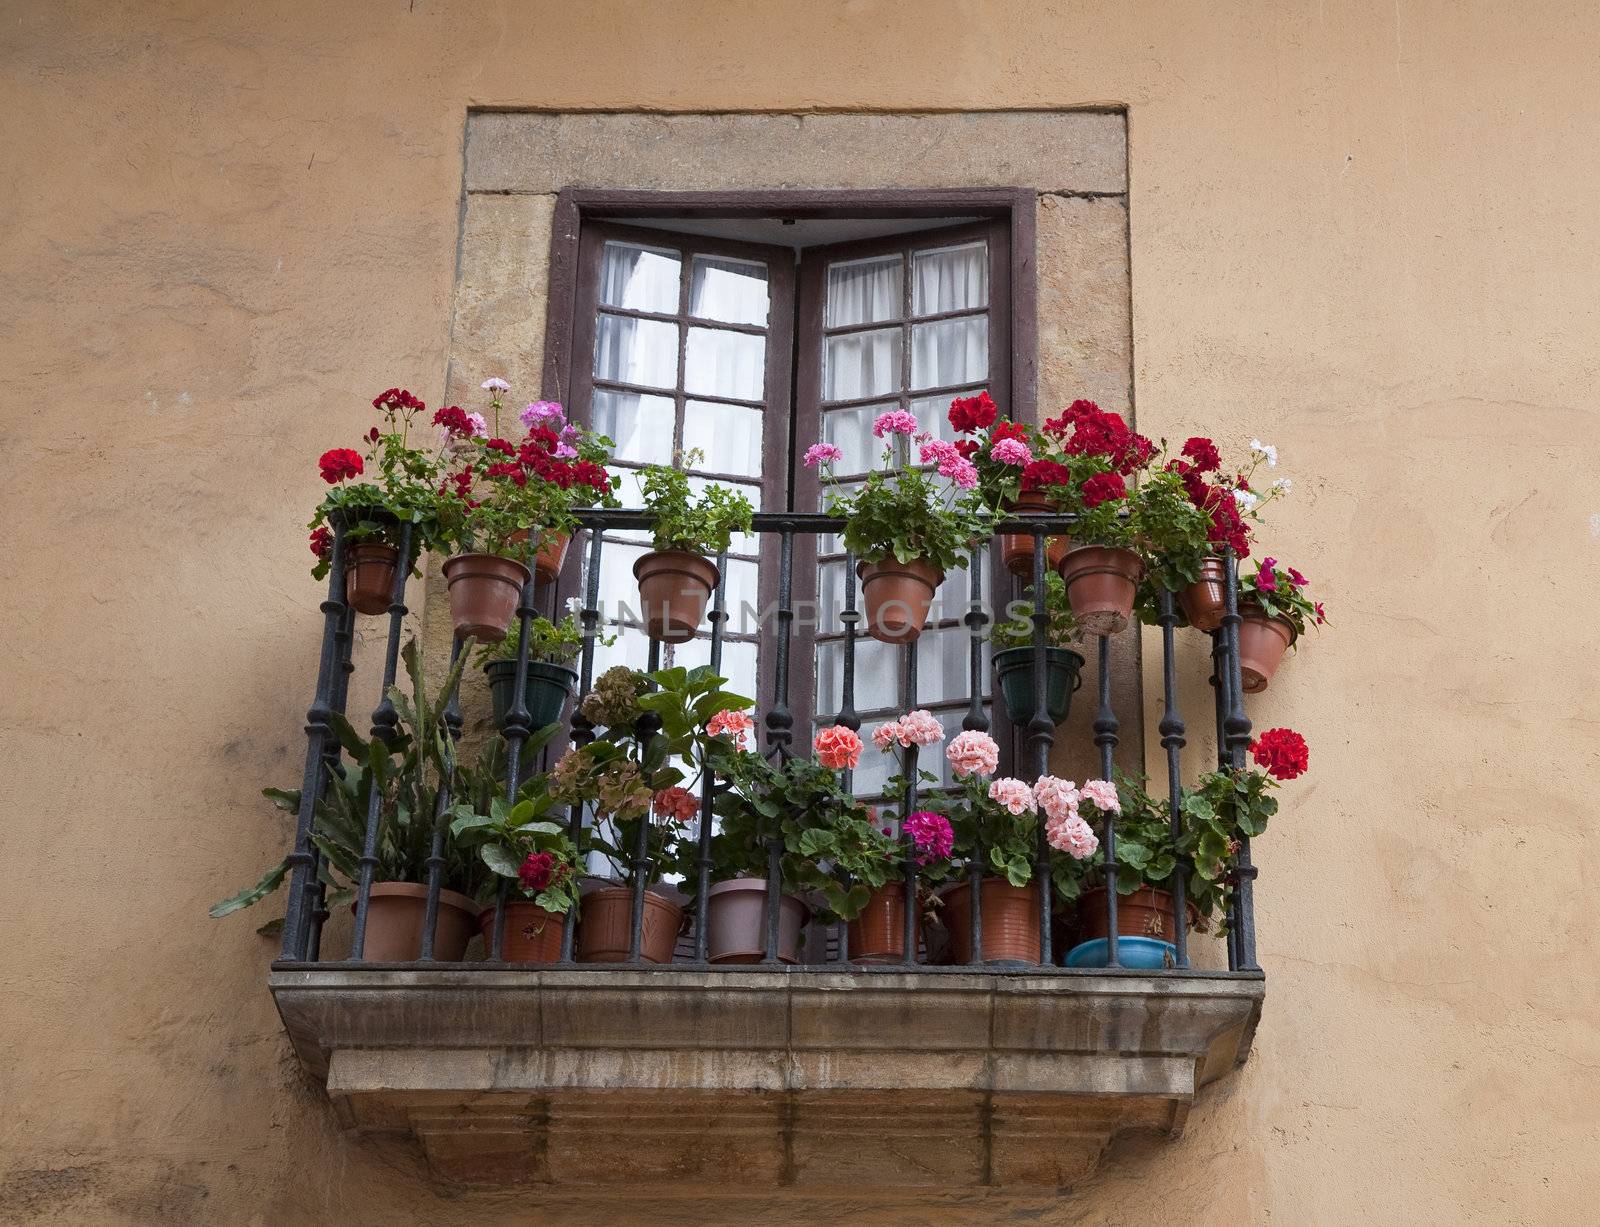 Beautiful tiny balcony with Geranium in many red colors - urban Oviedo, Spain.